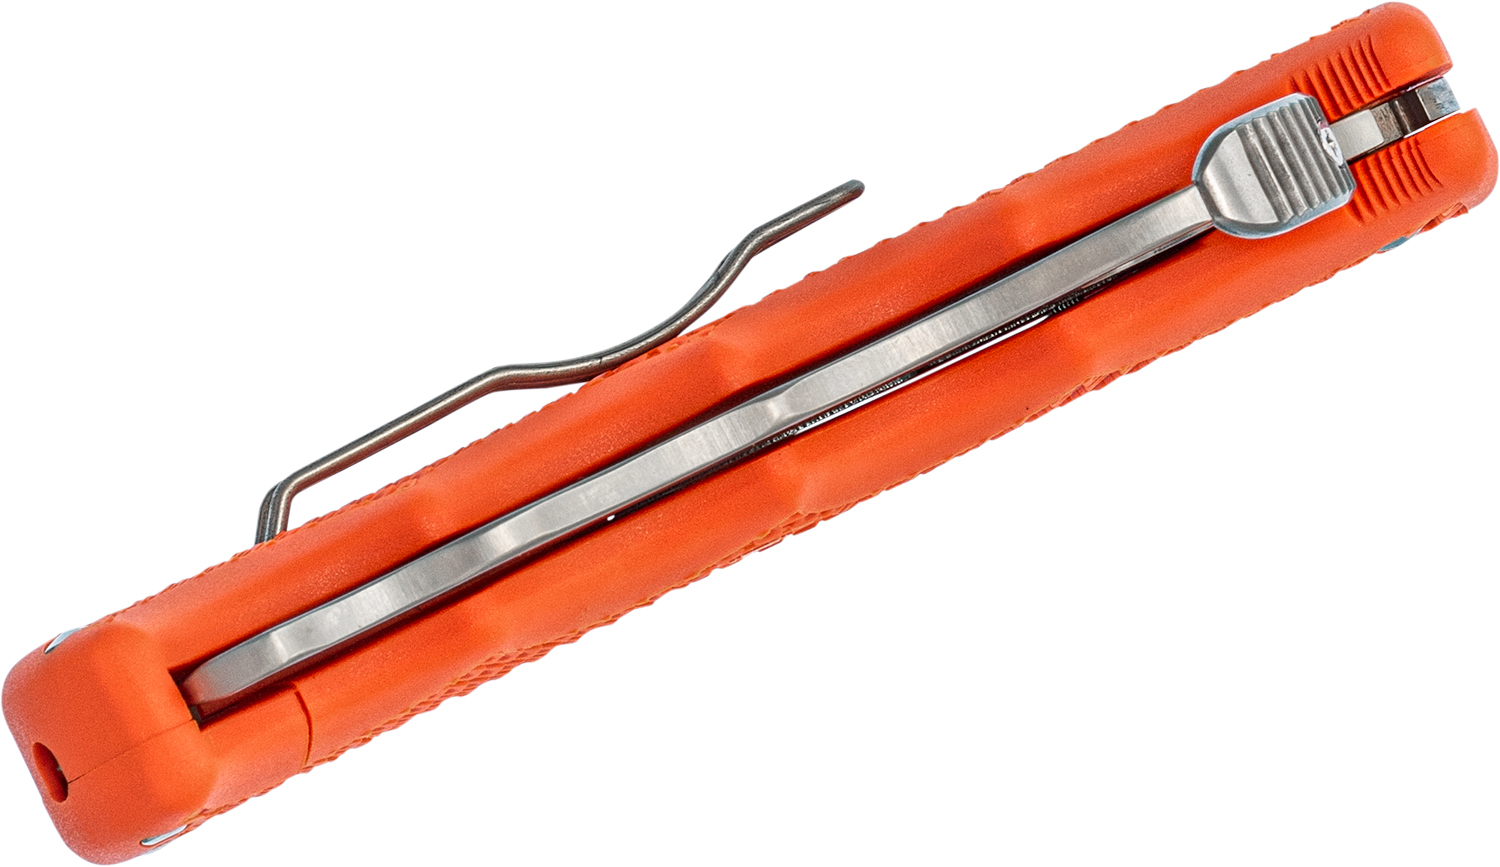 Складной нож Rescue Assist™ Orange - Spyderco 79PSOR, сталь VG-10 Satin Serrated, рукоять термопластик FRN, оранжевый - фото 5